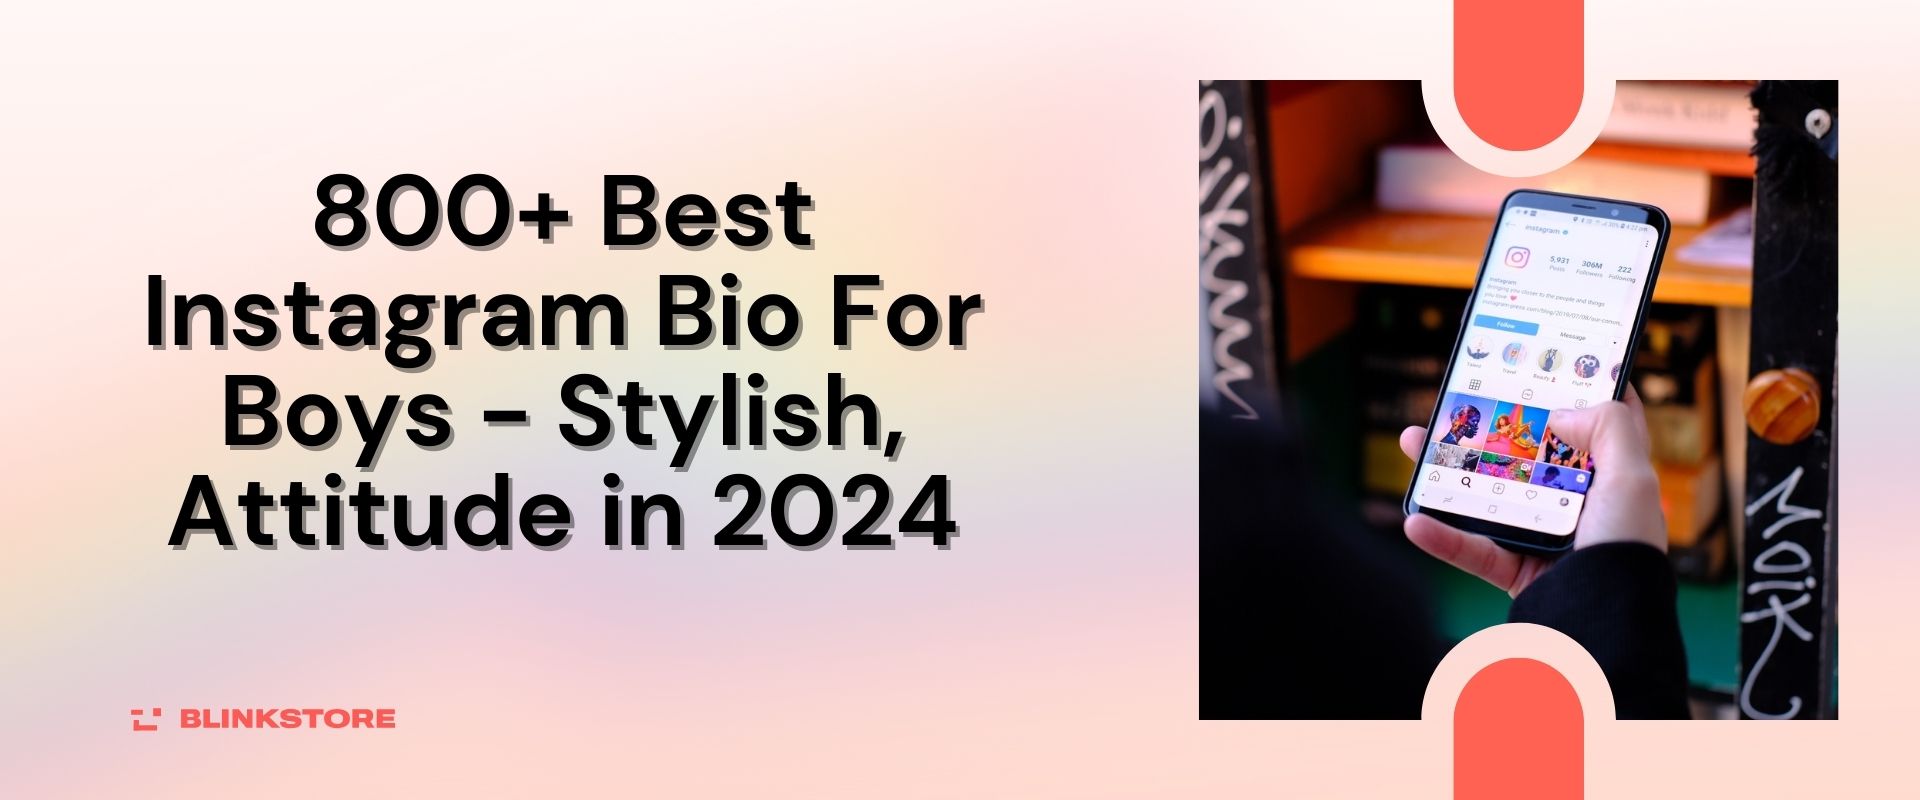 800+ Best Instagram Bio For Boys - Stylish, Attitude in 2024